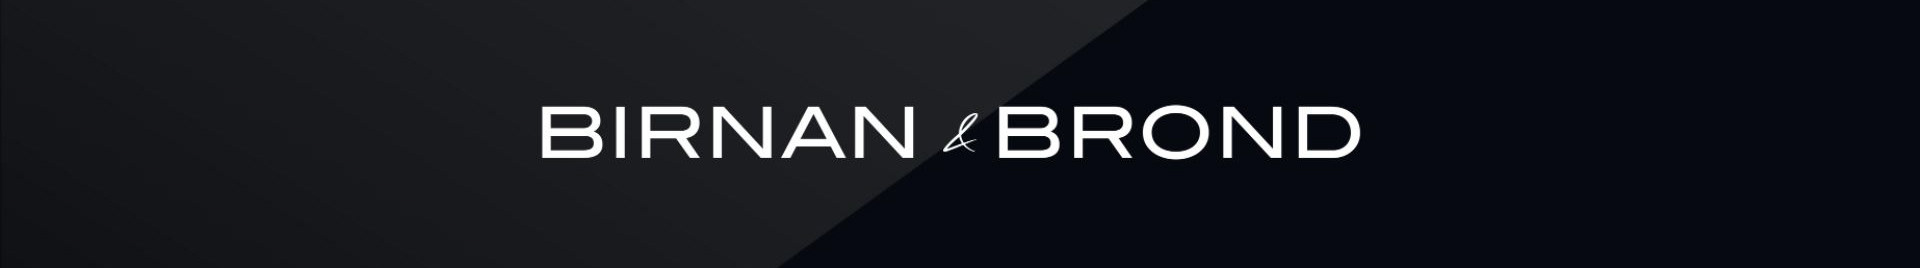 Birnan Brond's profile banner